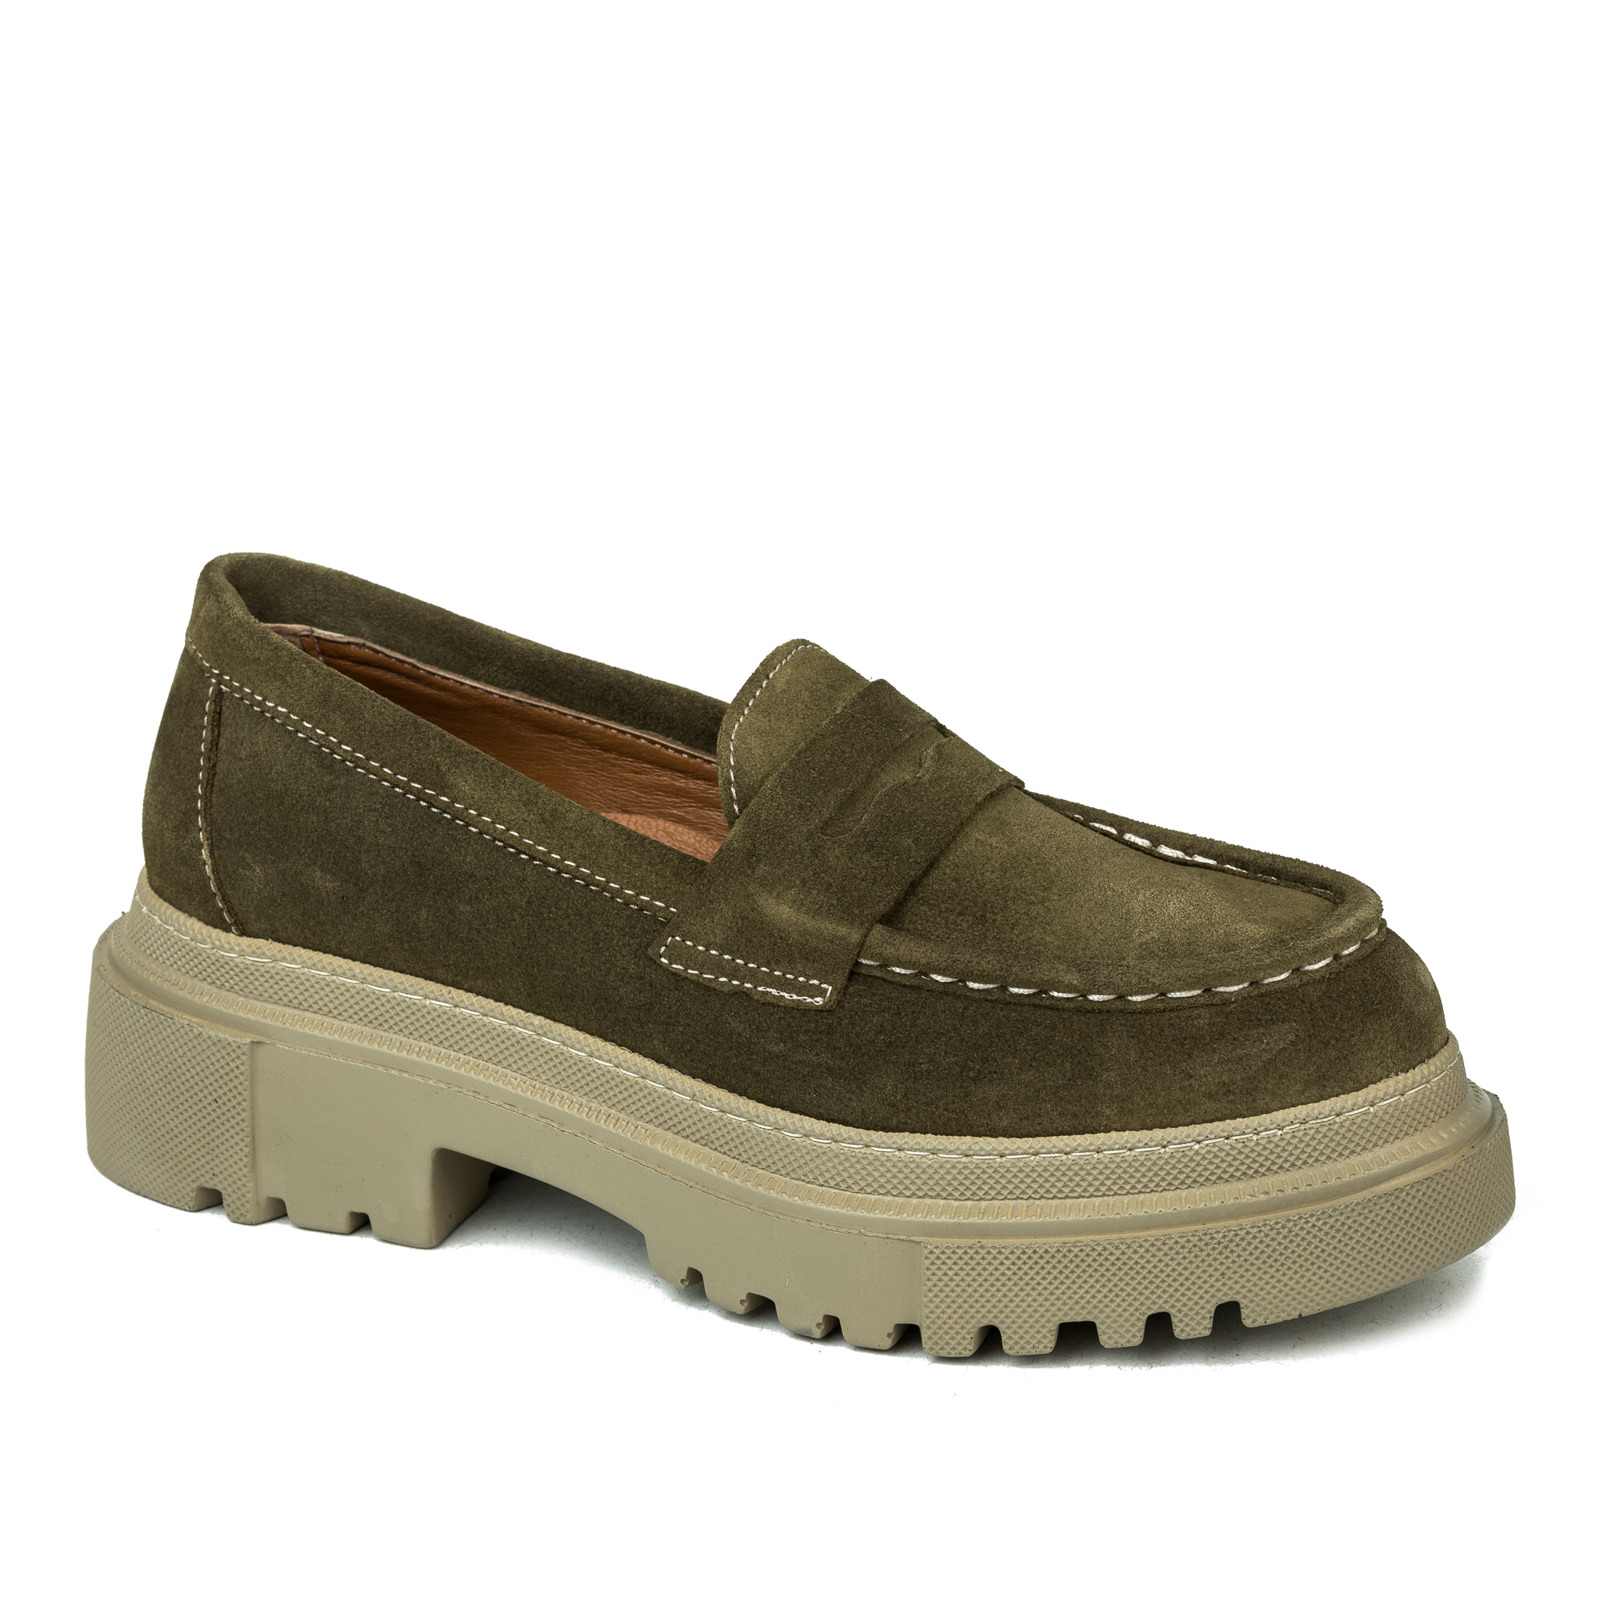 Leather shoes & flats B063 - DARK GREEN